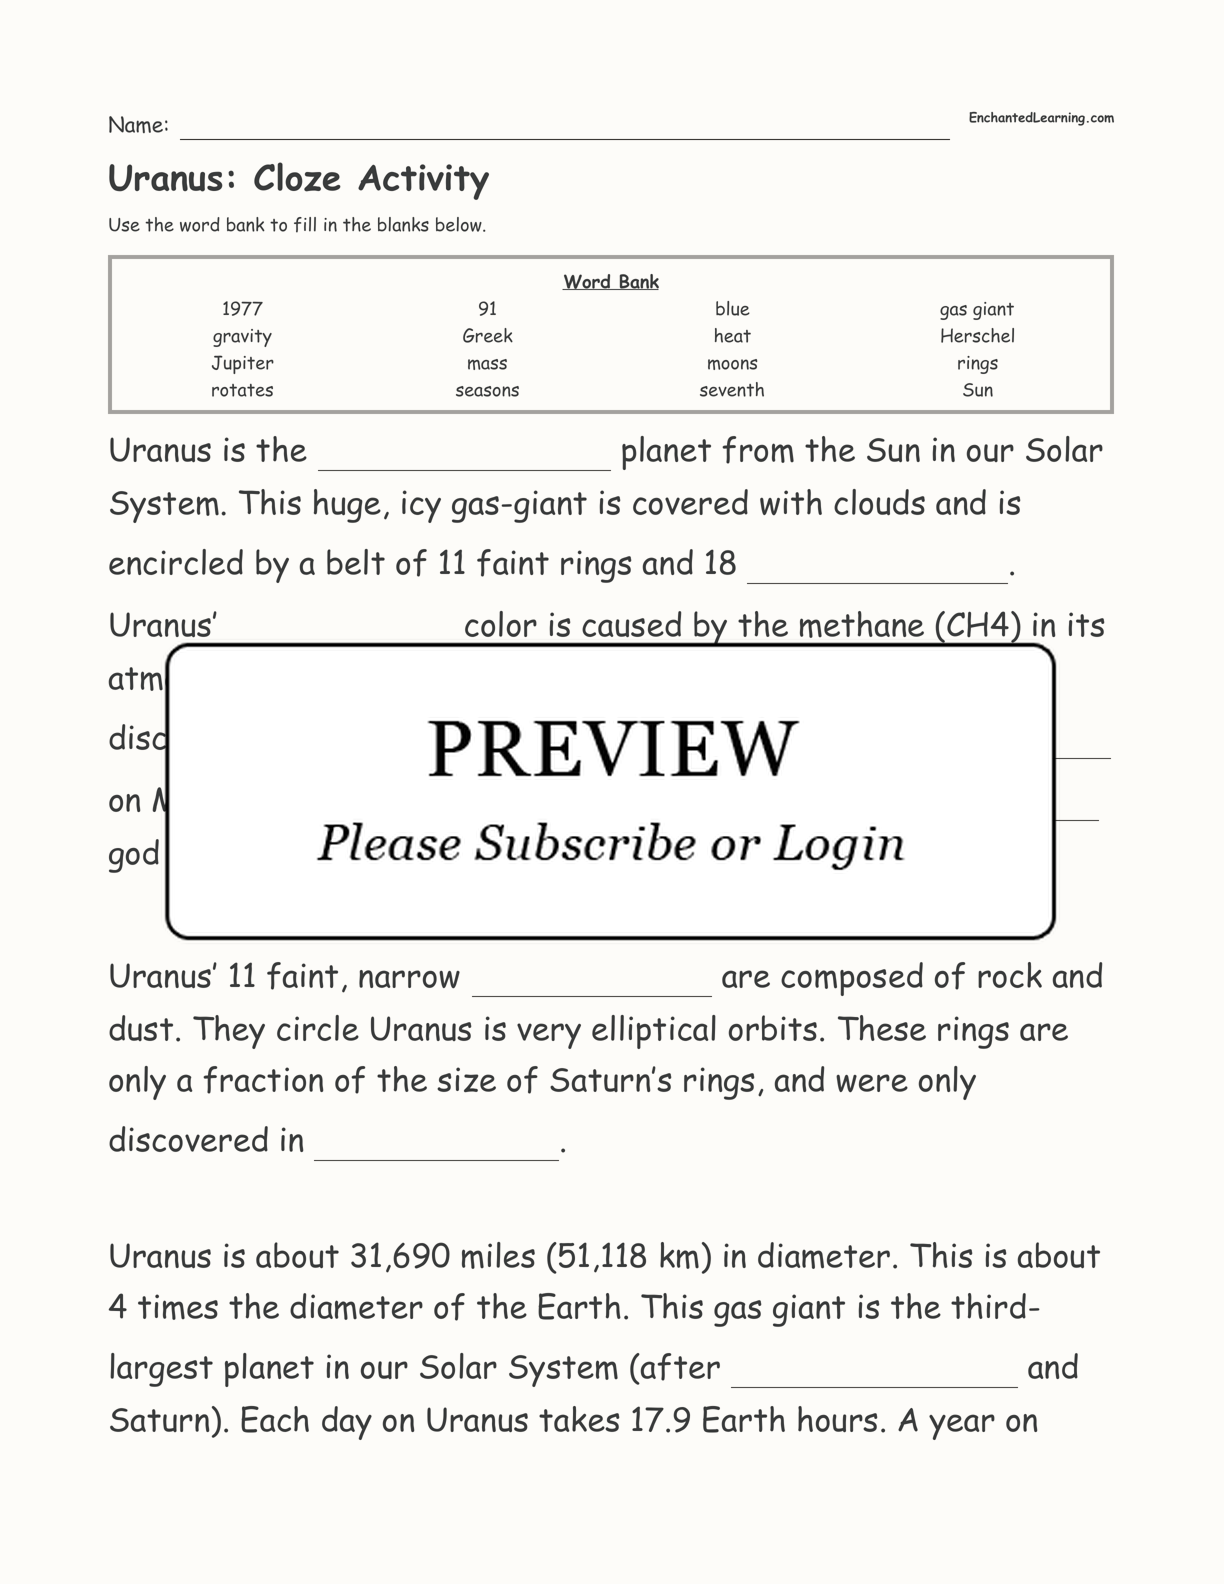 Uranus: Cloze Activity interactive worksheet page 1